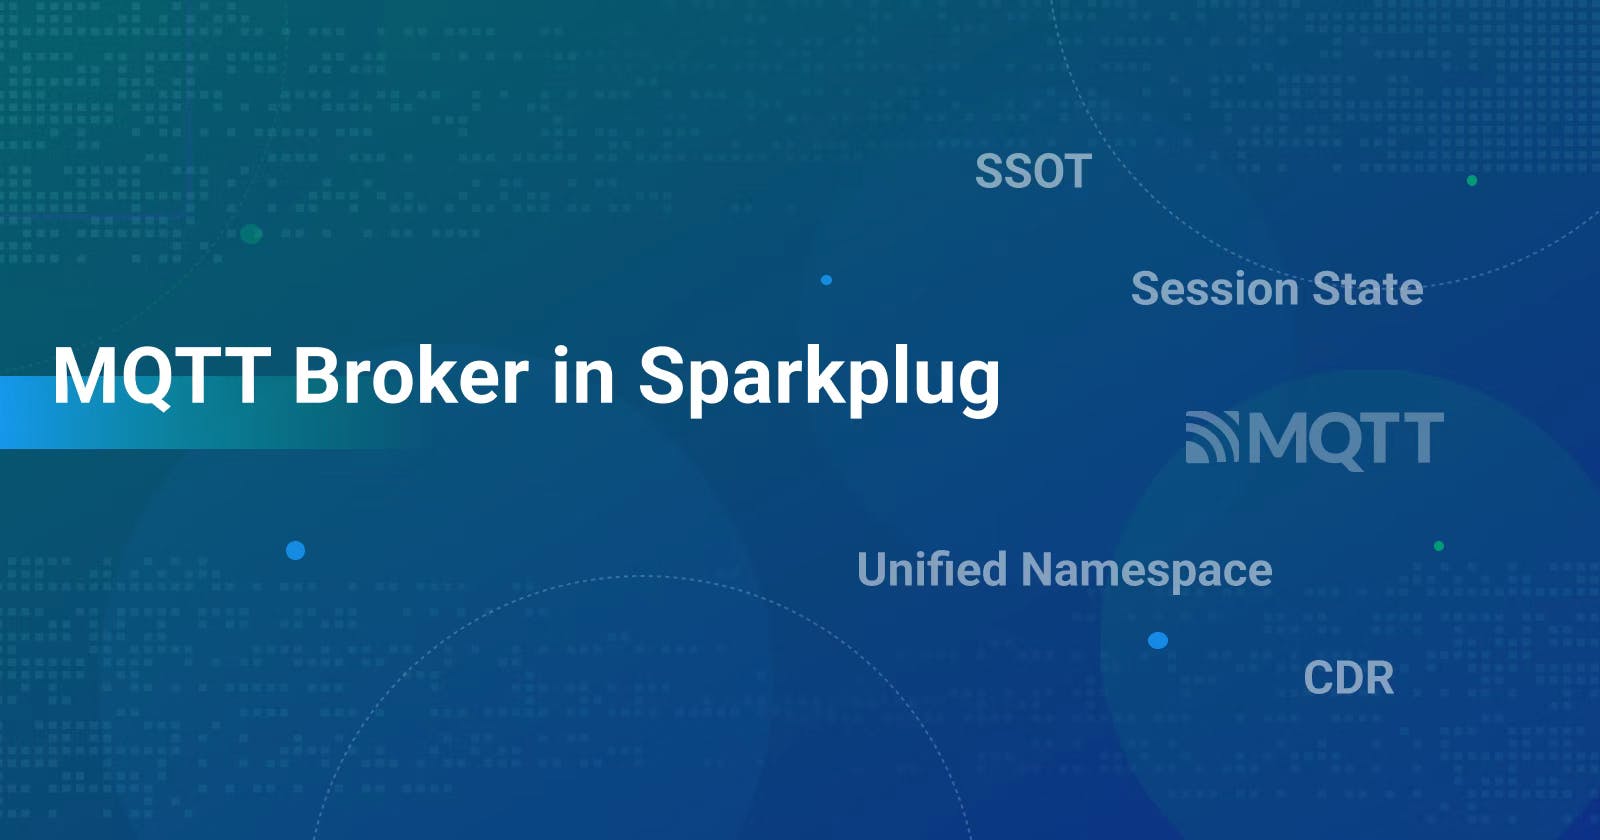 5 Key Concepts for MQTT Broker in Sparkplug Specification